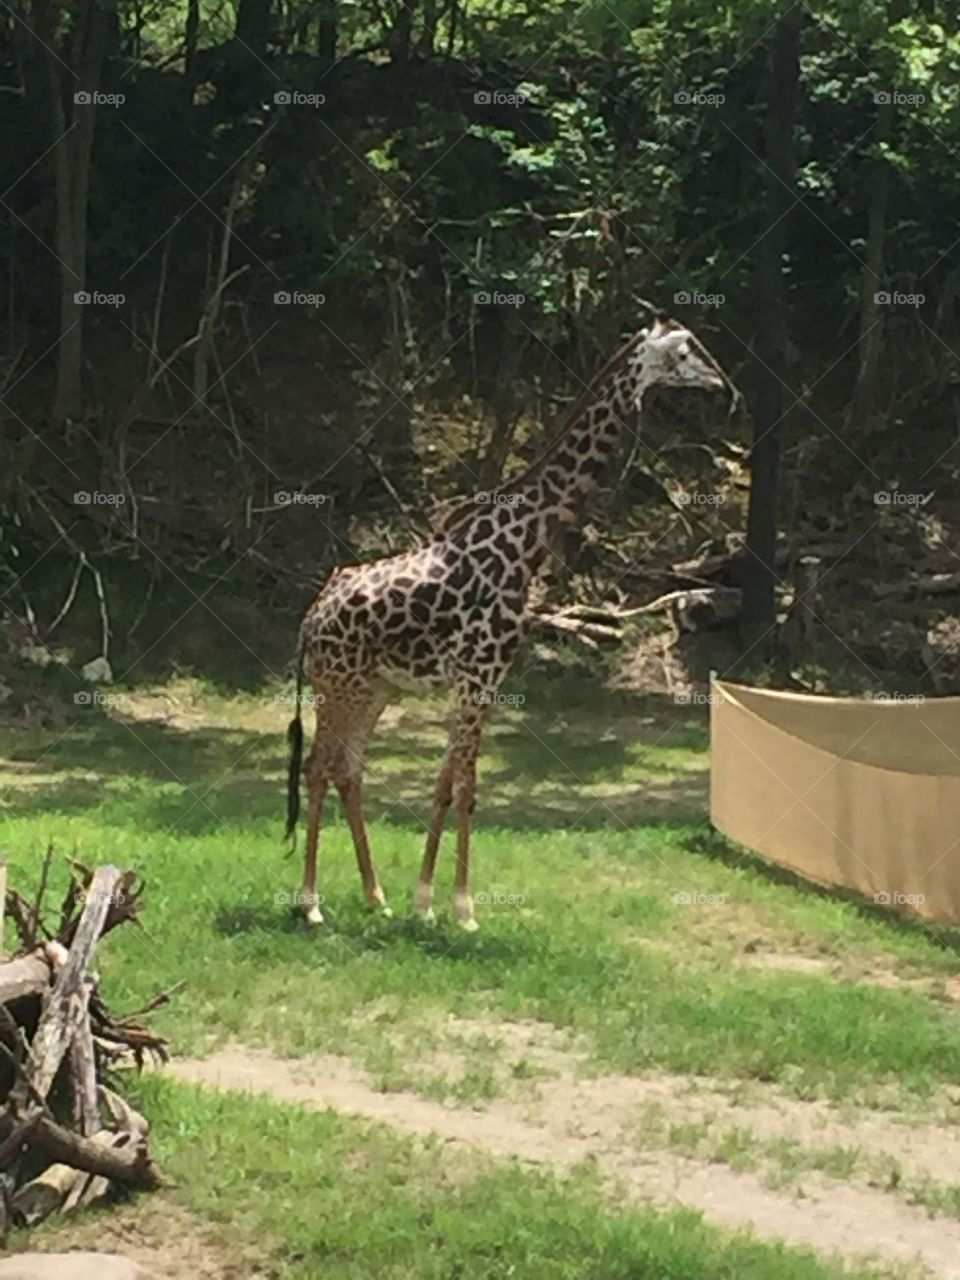 Sending a Day at the Cincinnati zoo